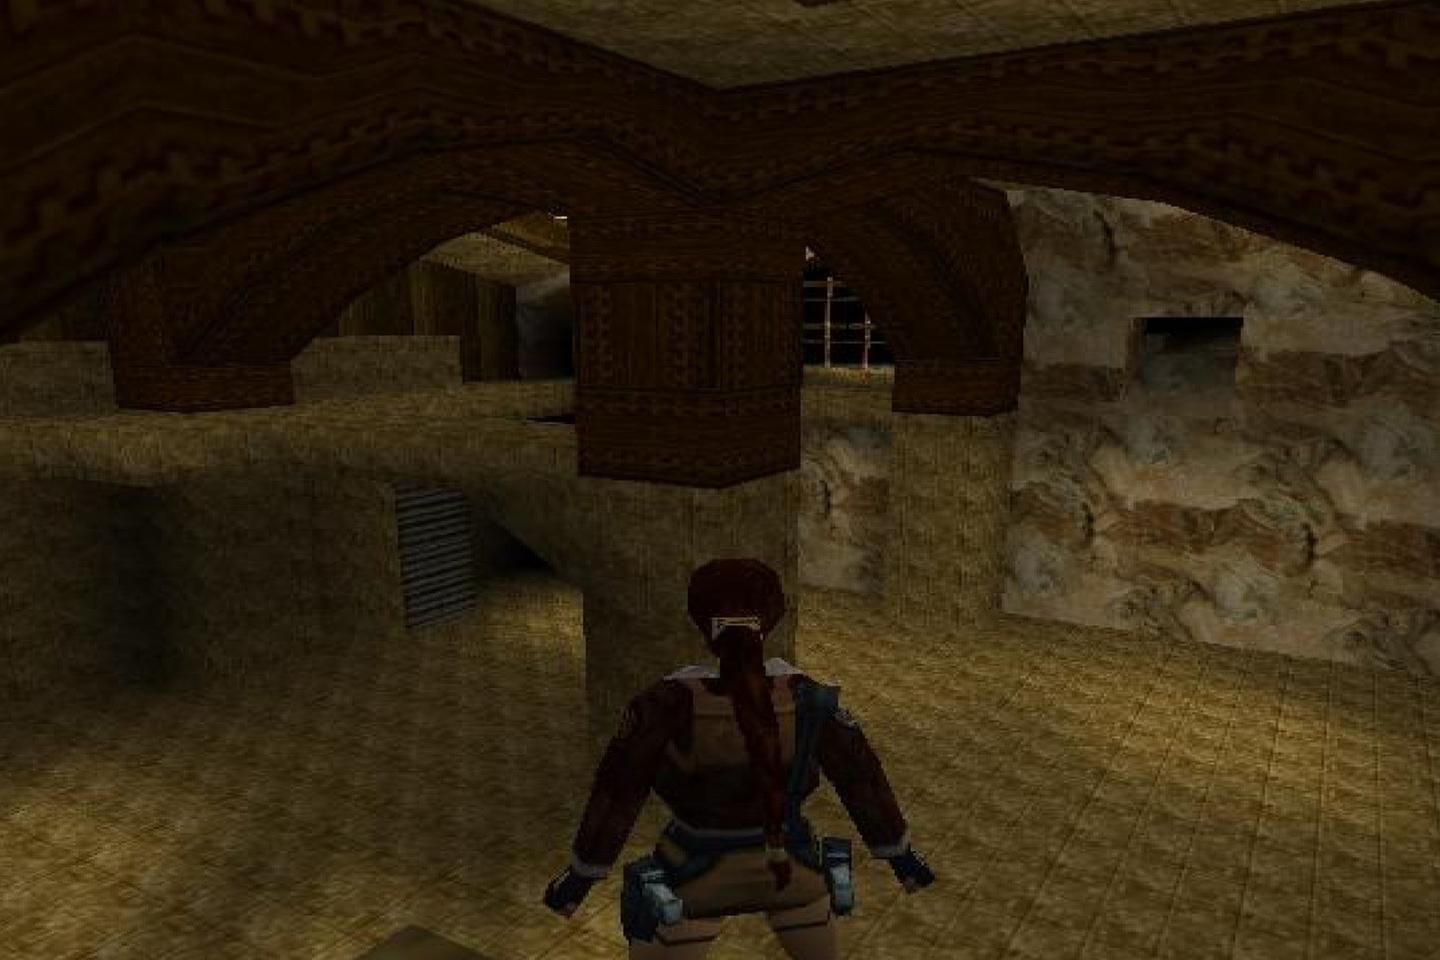 Lara wearing padded gear in dimly lit tomb